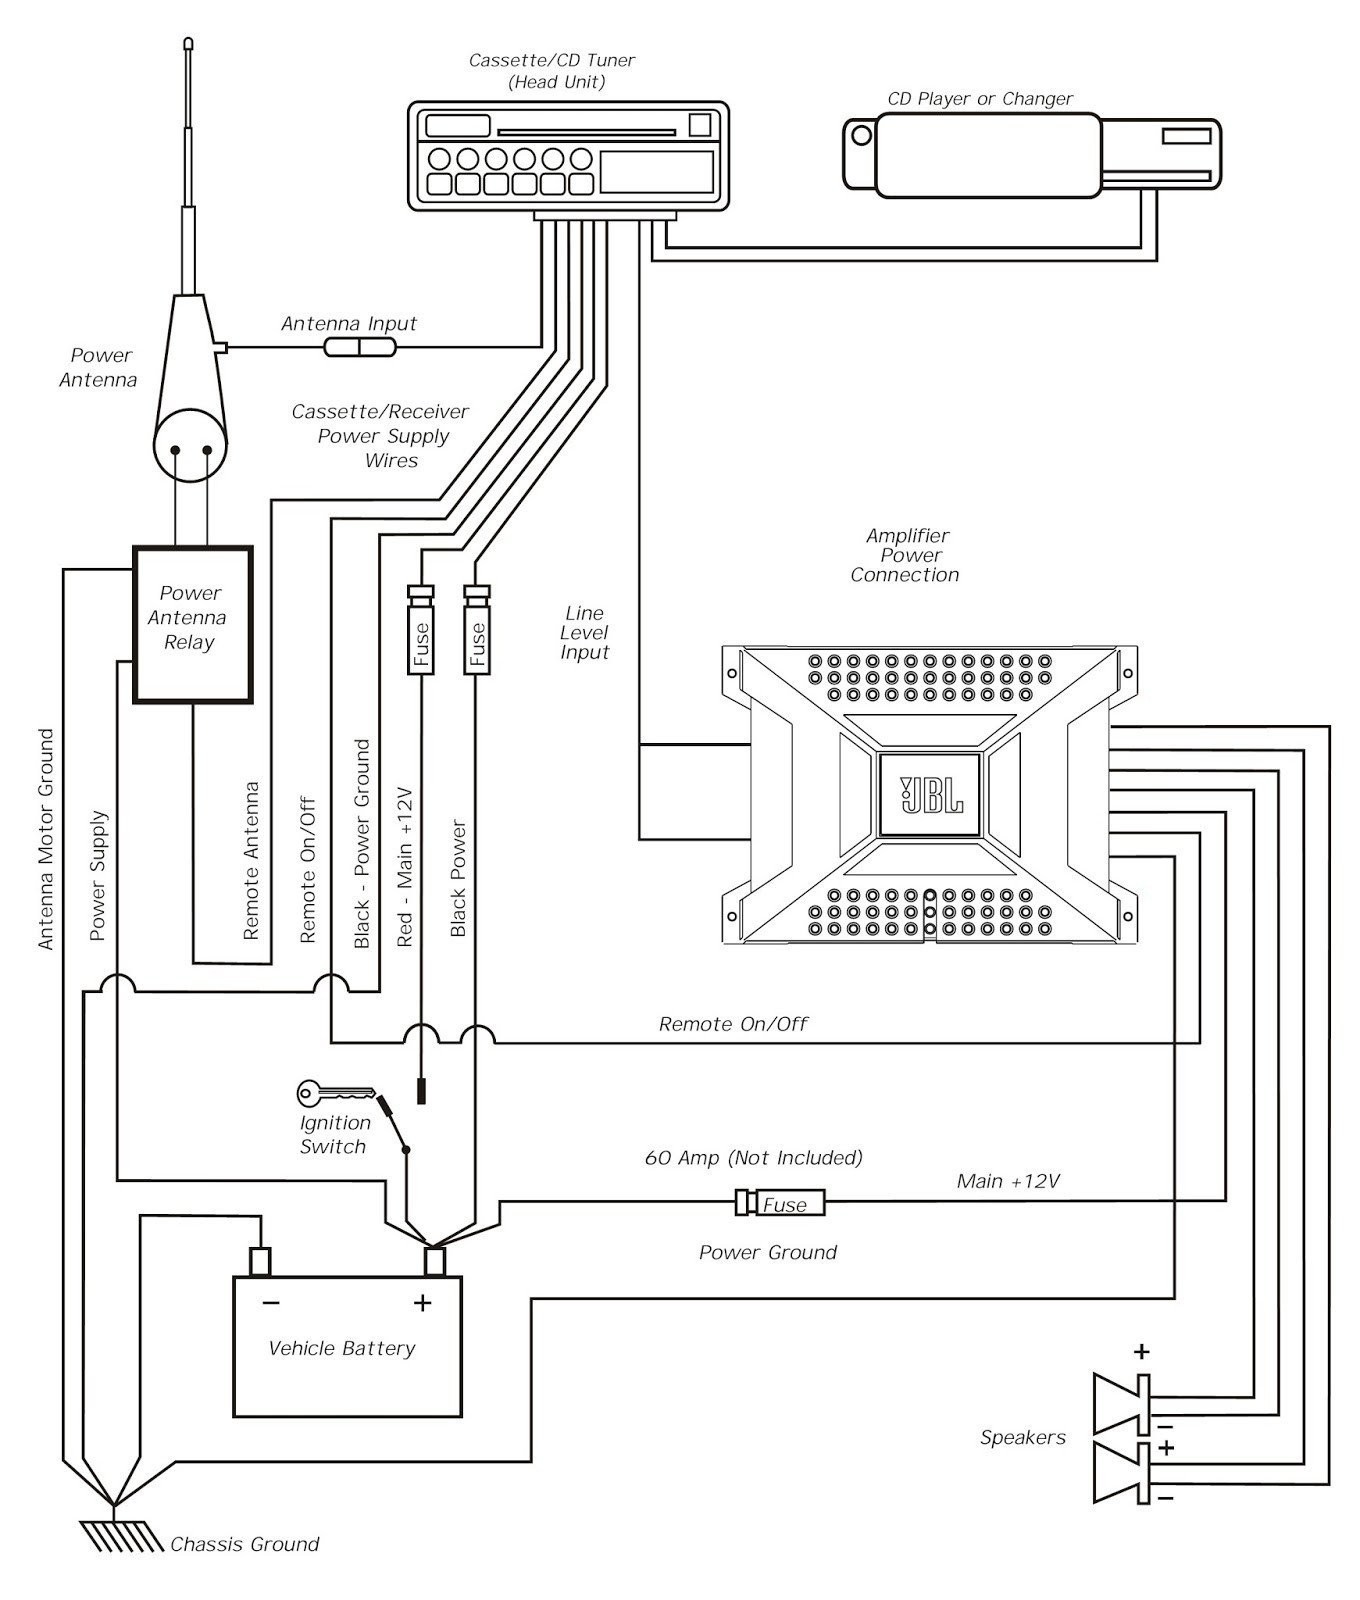 2007 Audi A4 Engine Diagram Power Seat Wiring Diagram Best Audi A4 Power Seat Wiring Diagram Of 2007 Audi A4 Engine Diagram